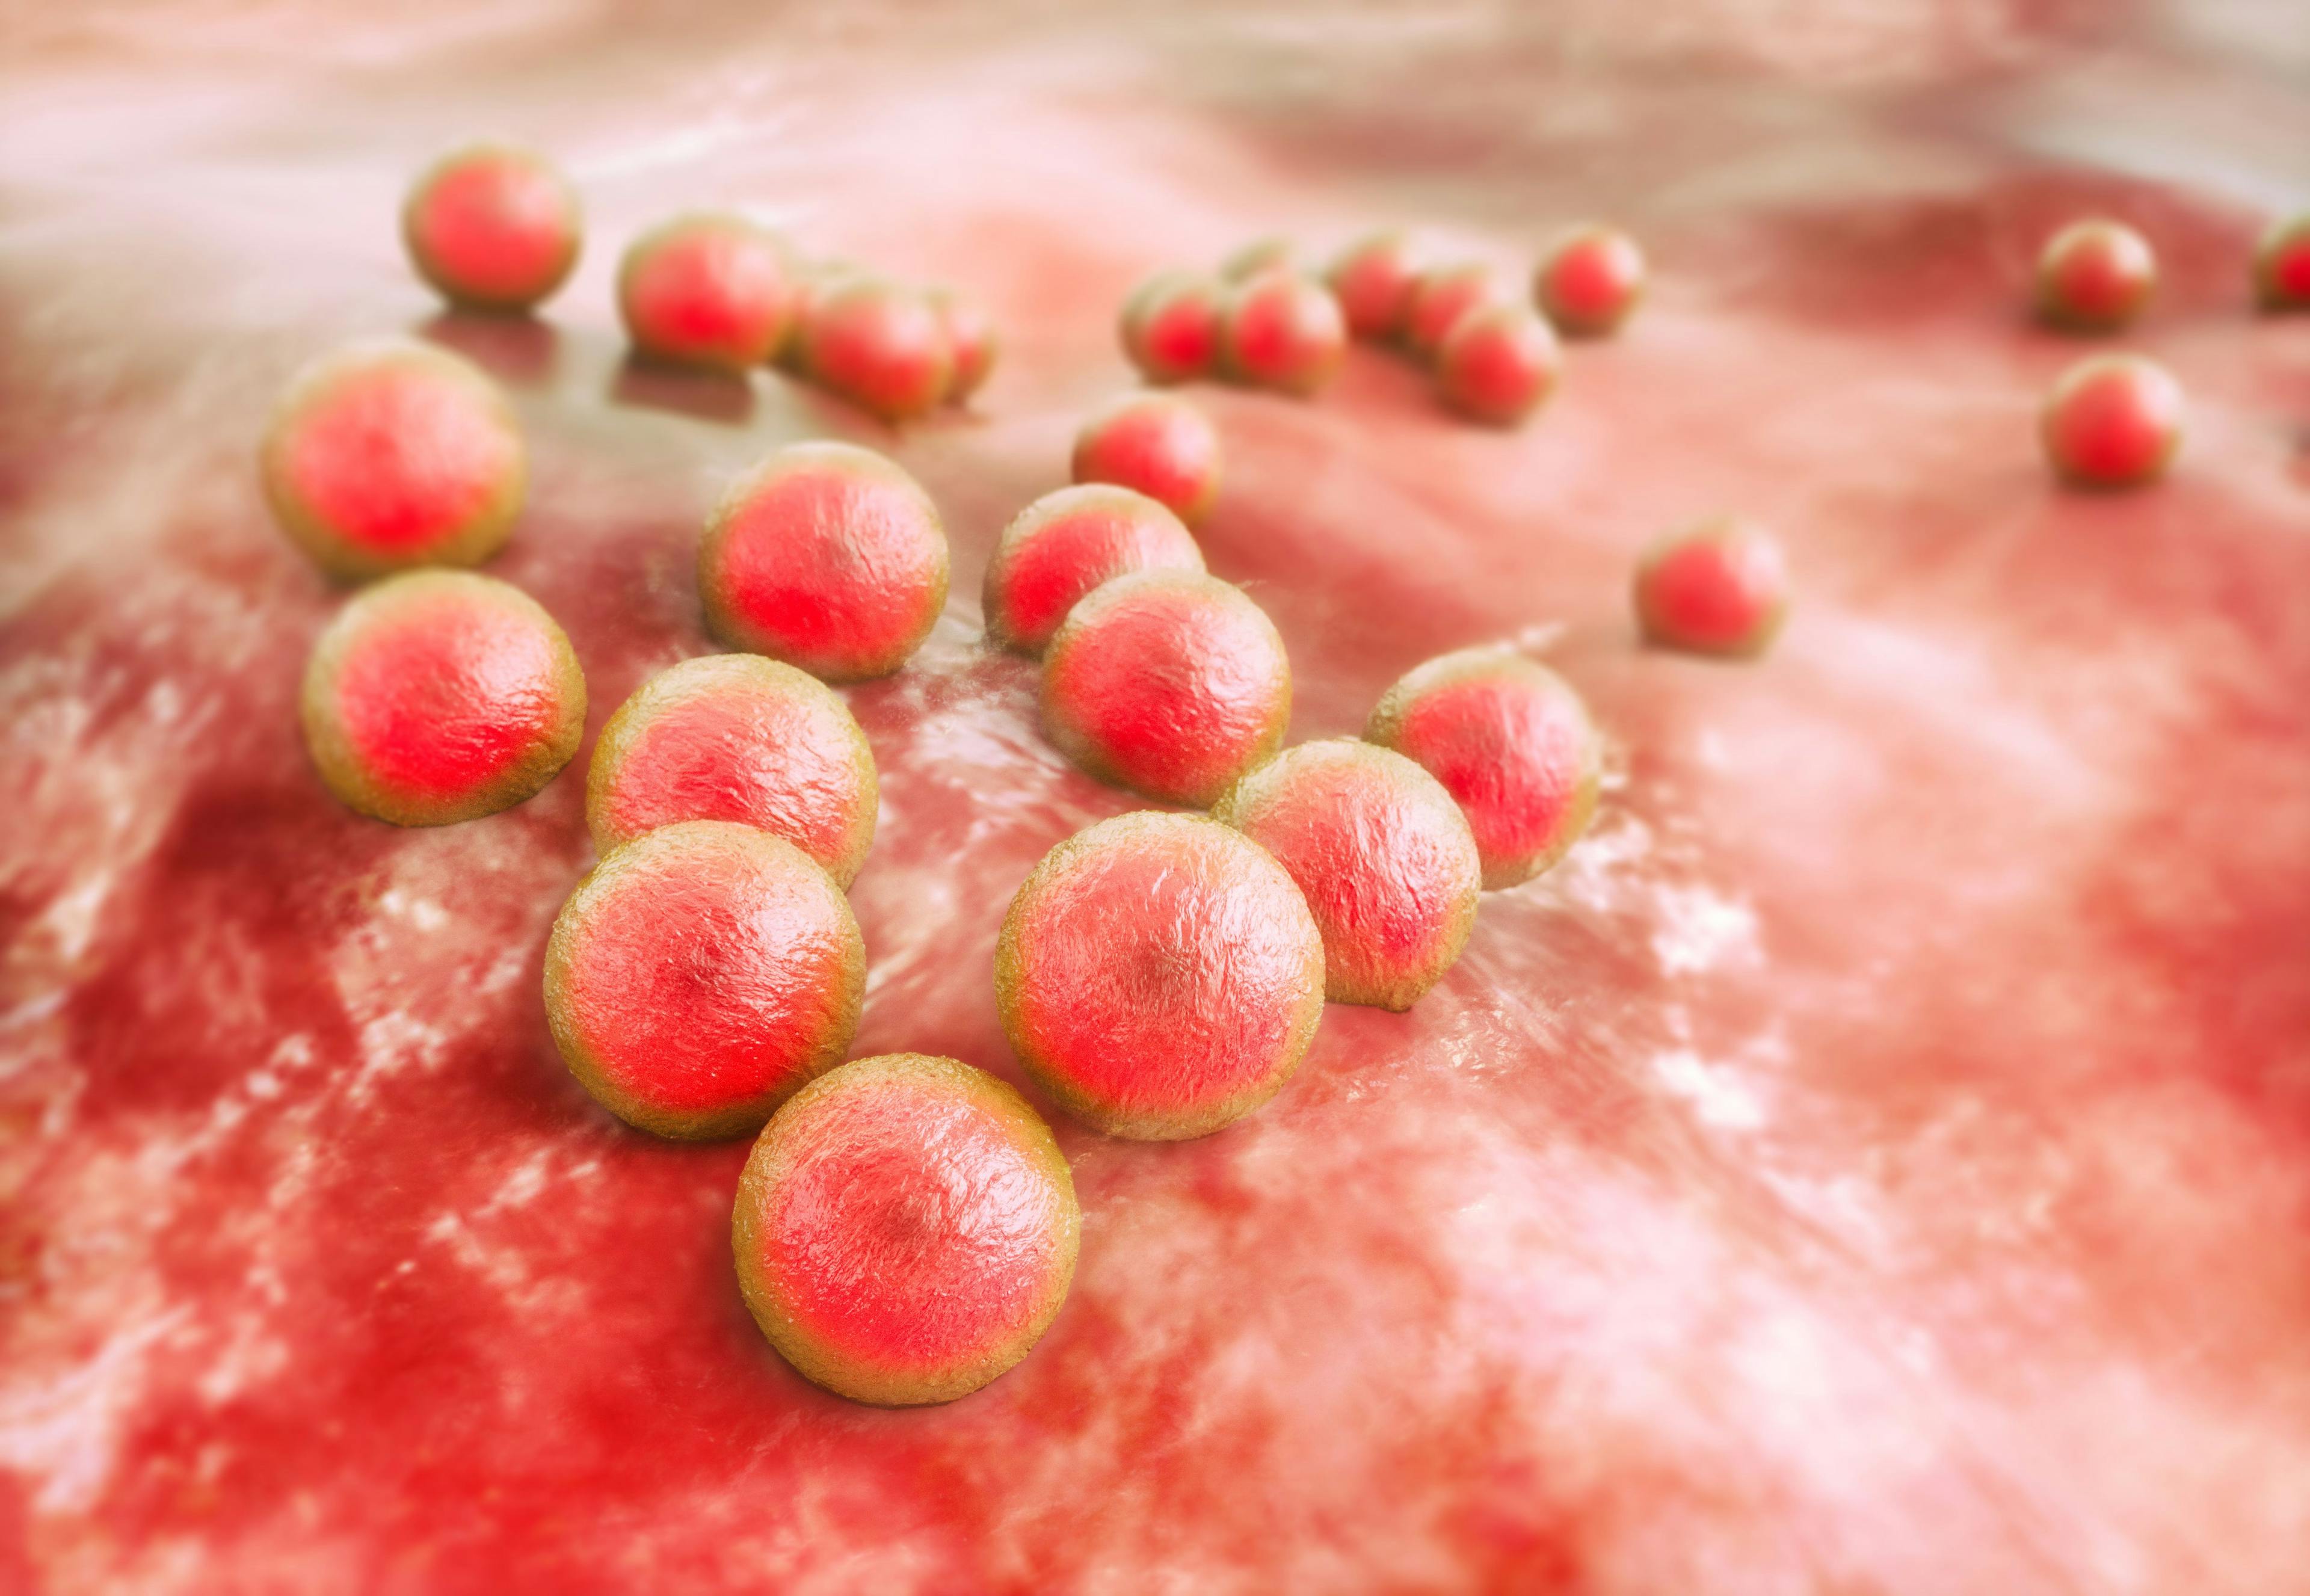 The Underlying Threat of Multidrug-Resistant Pathogens in the COVID-19 Era